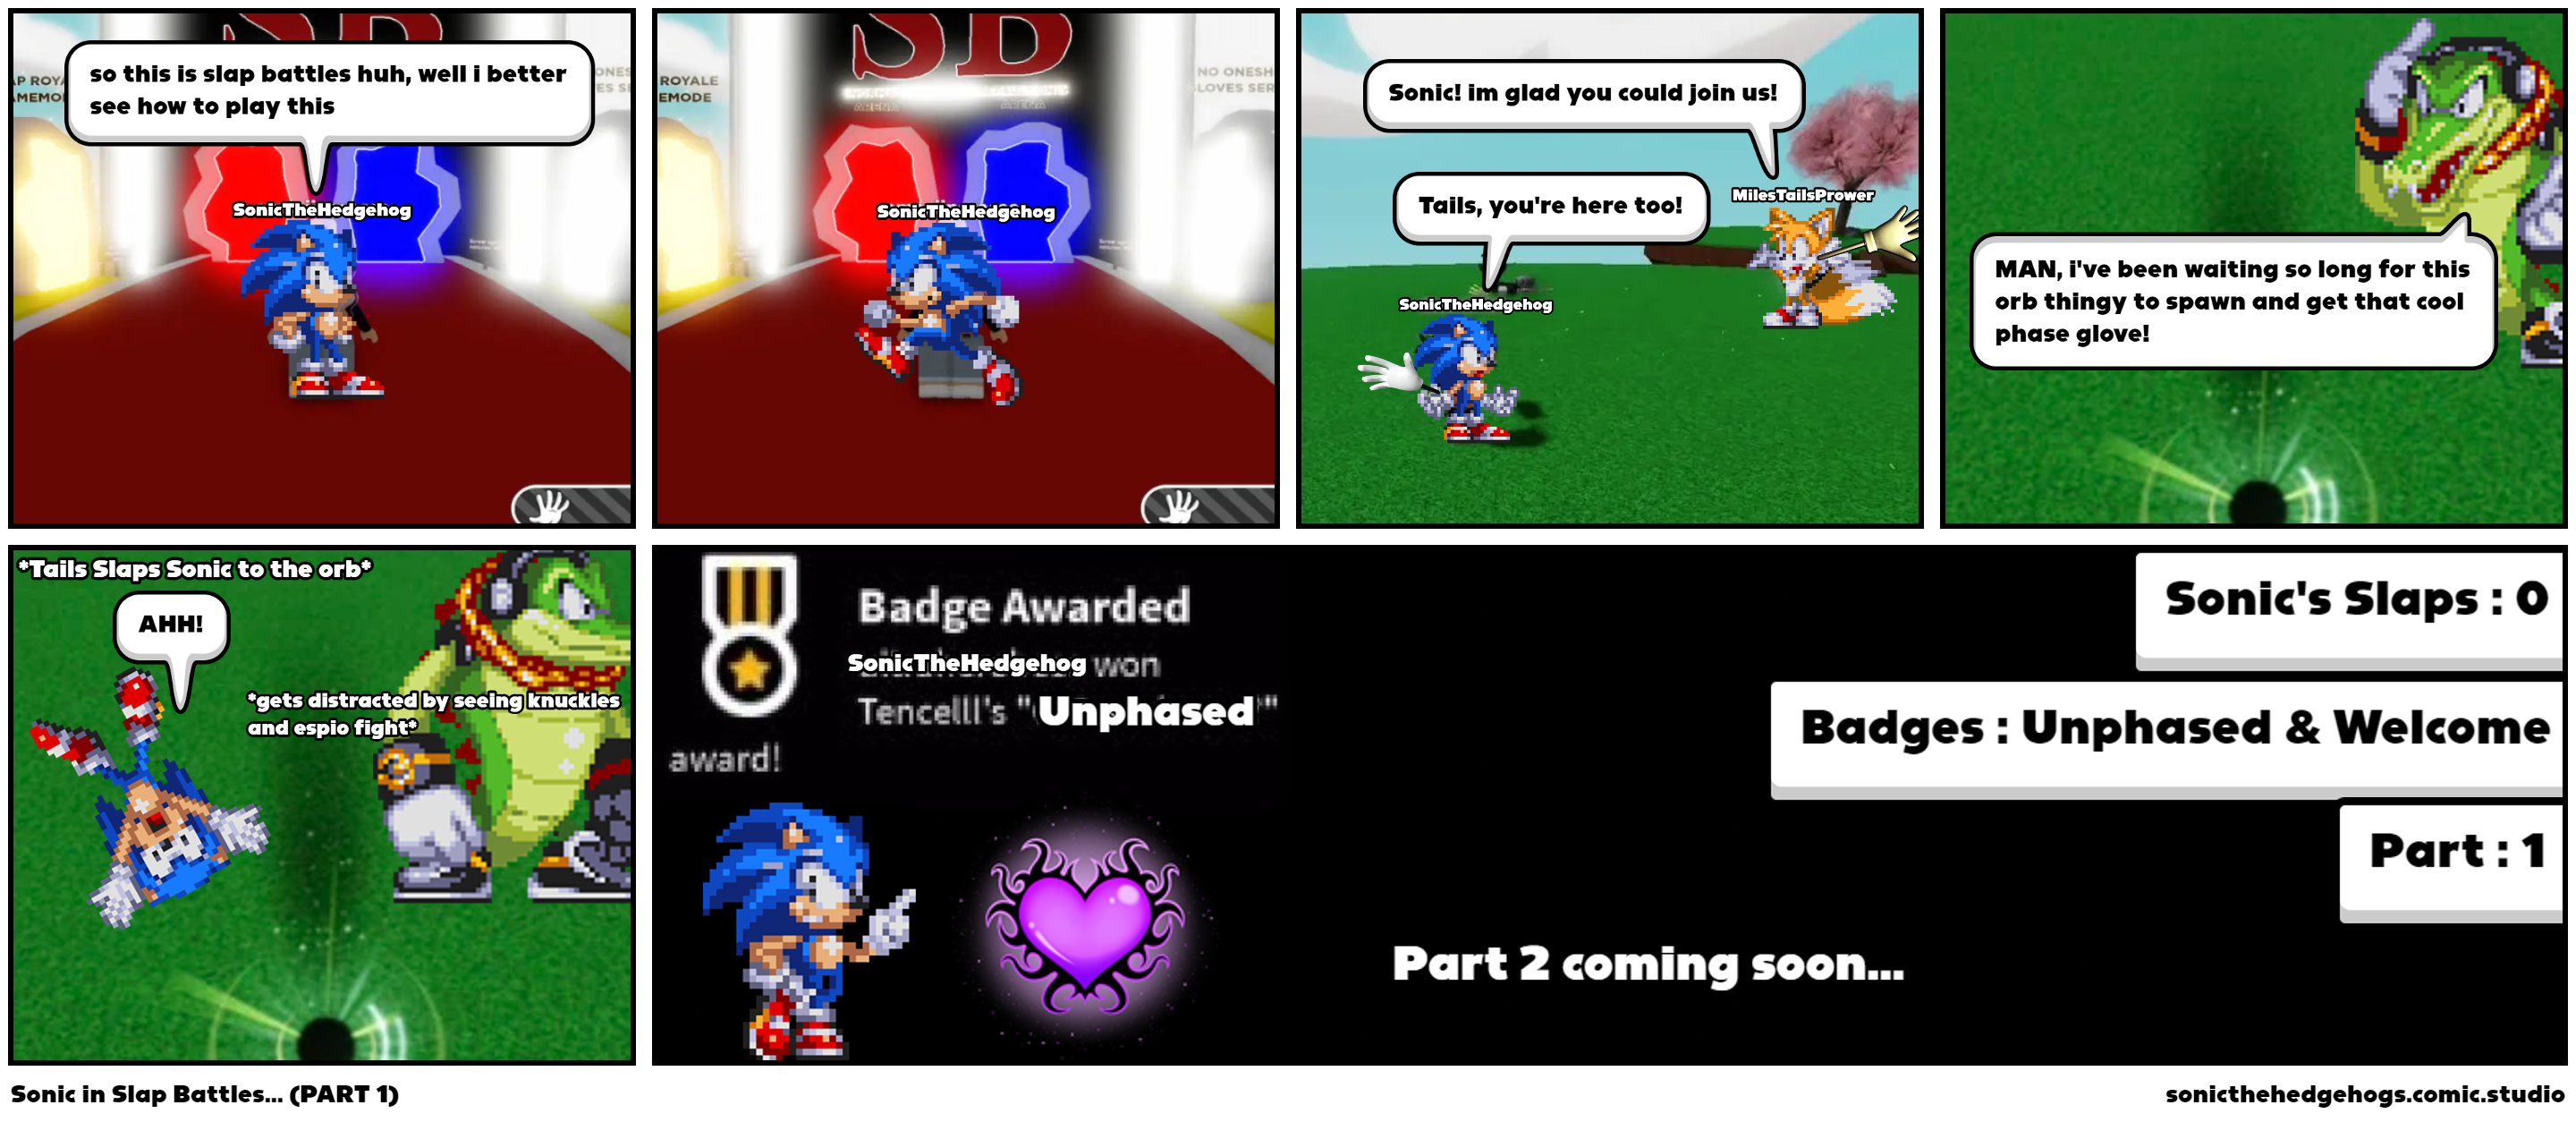 Sonic in Slap Battles... (PART 1)